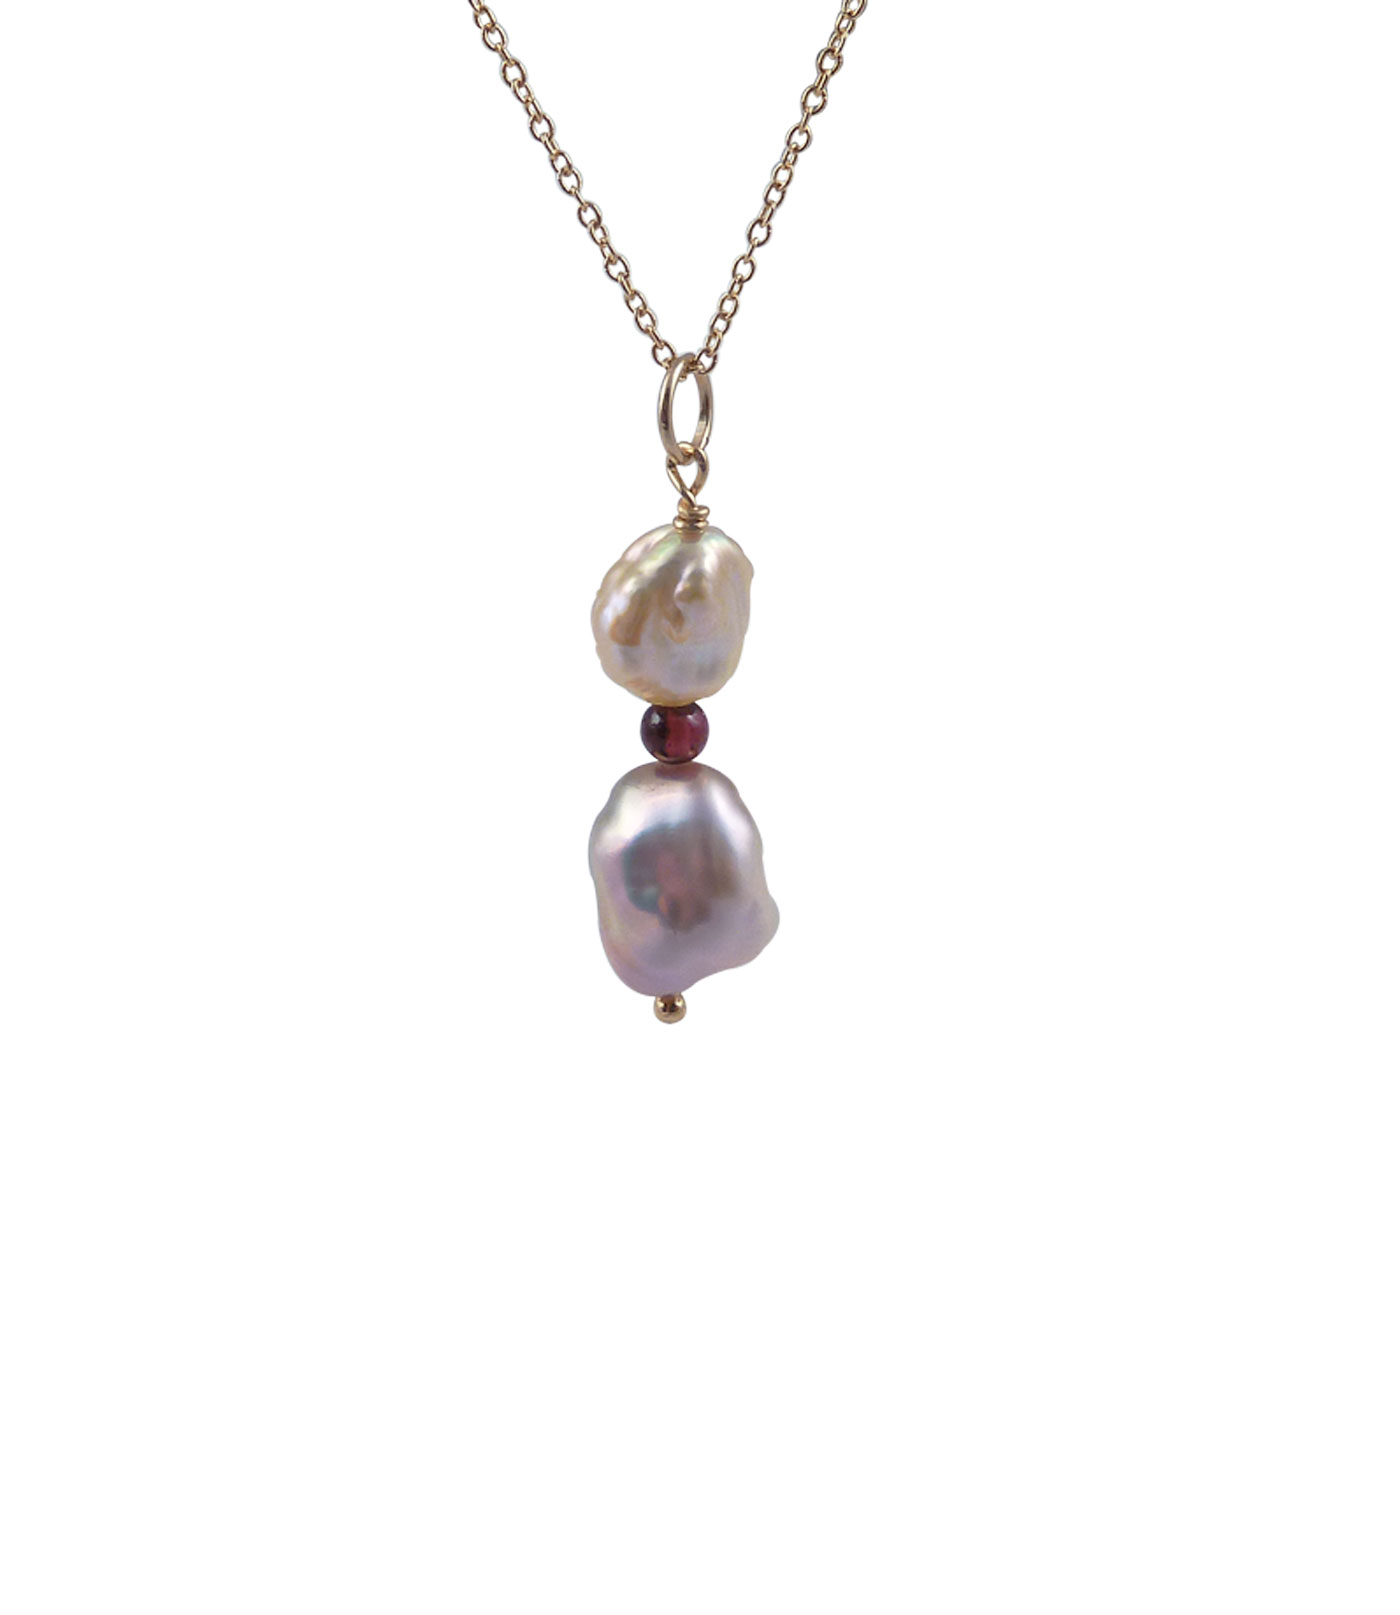 Multicolored keshi pearl jewelry pendant with garnet